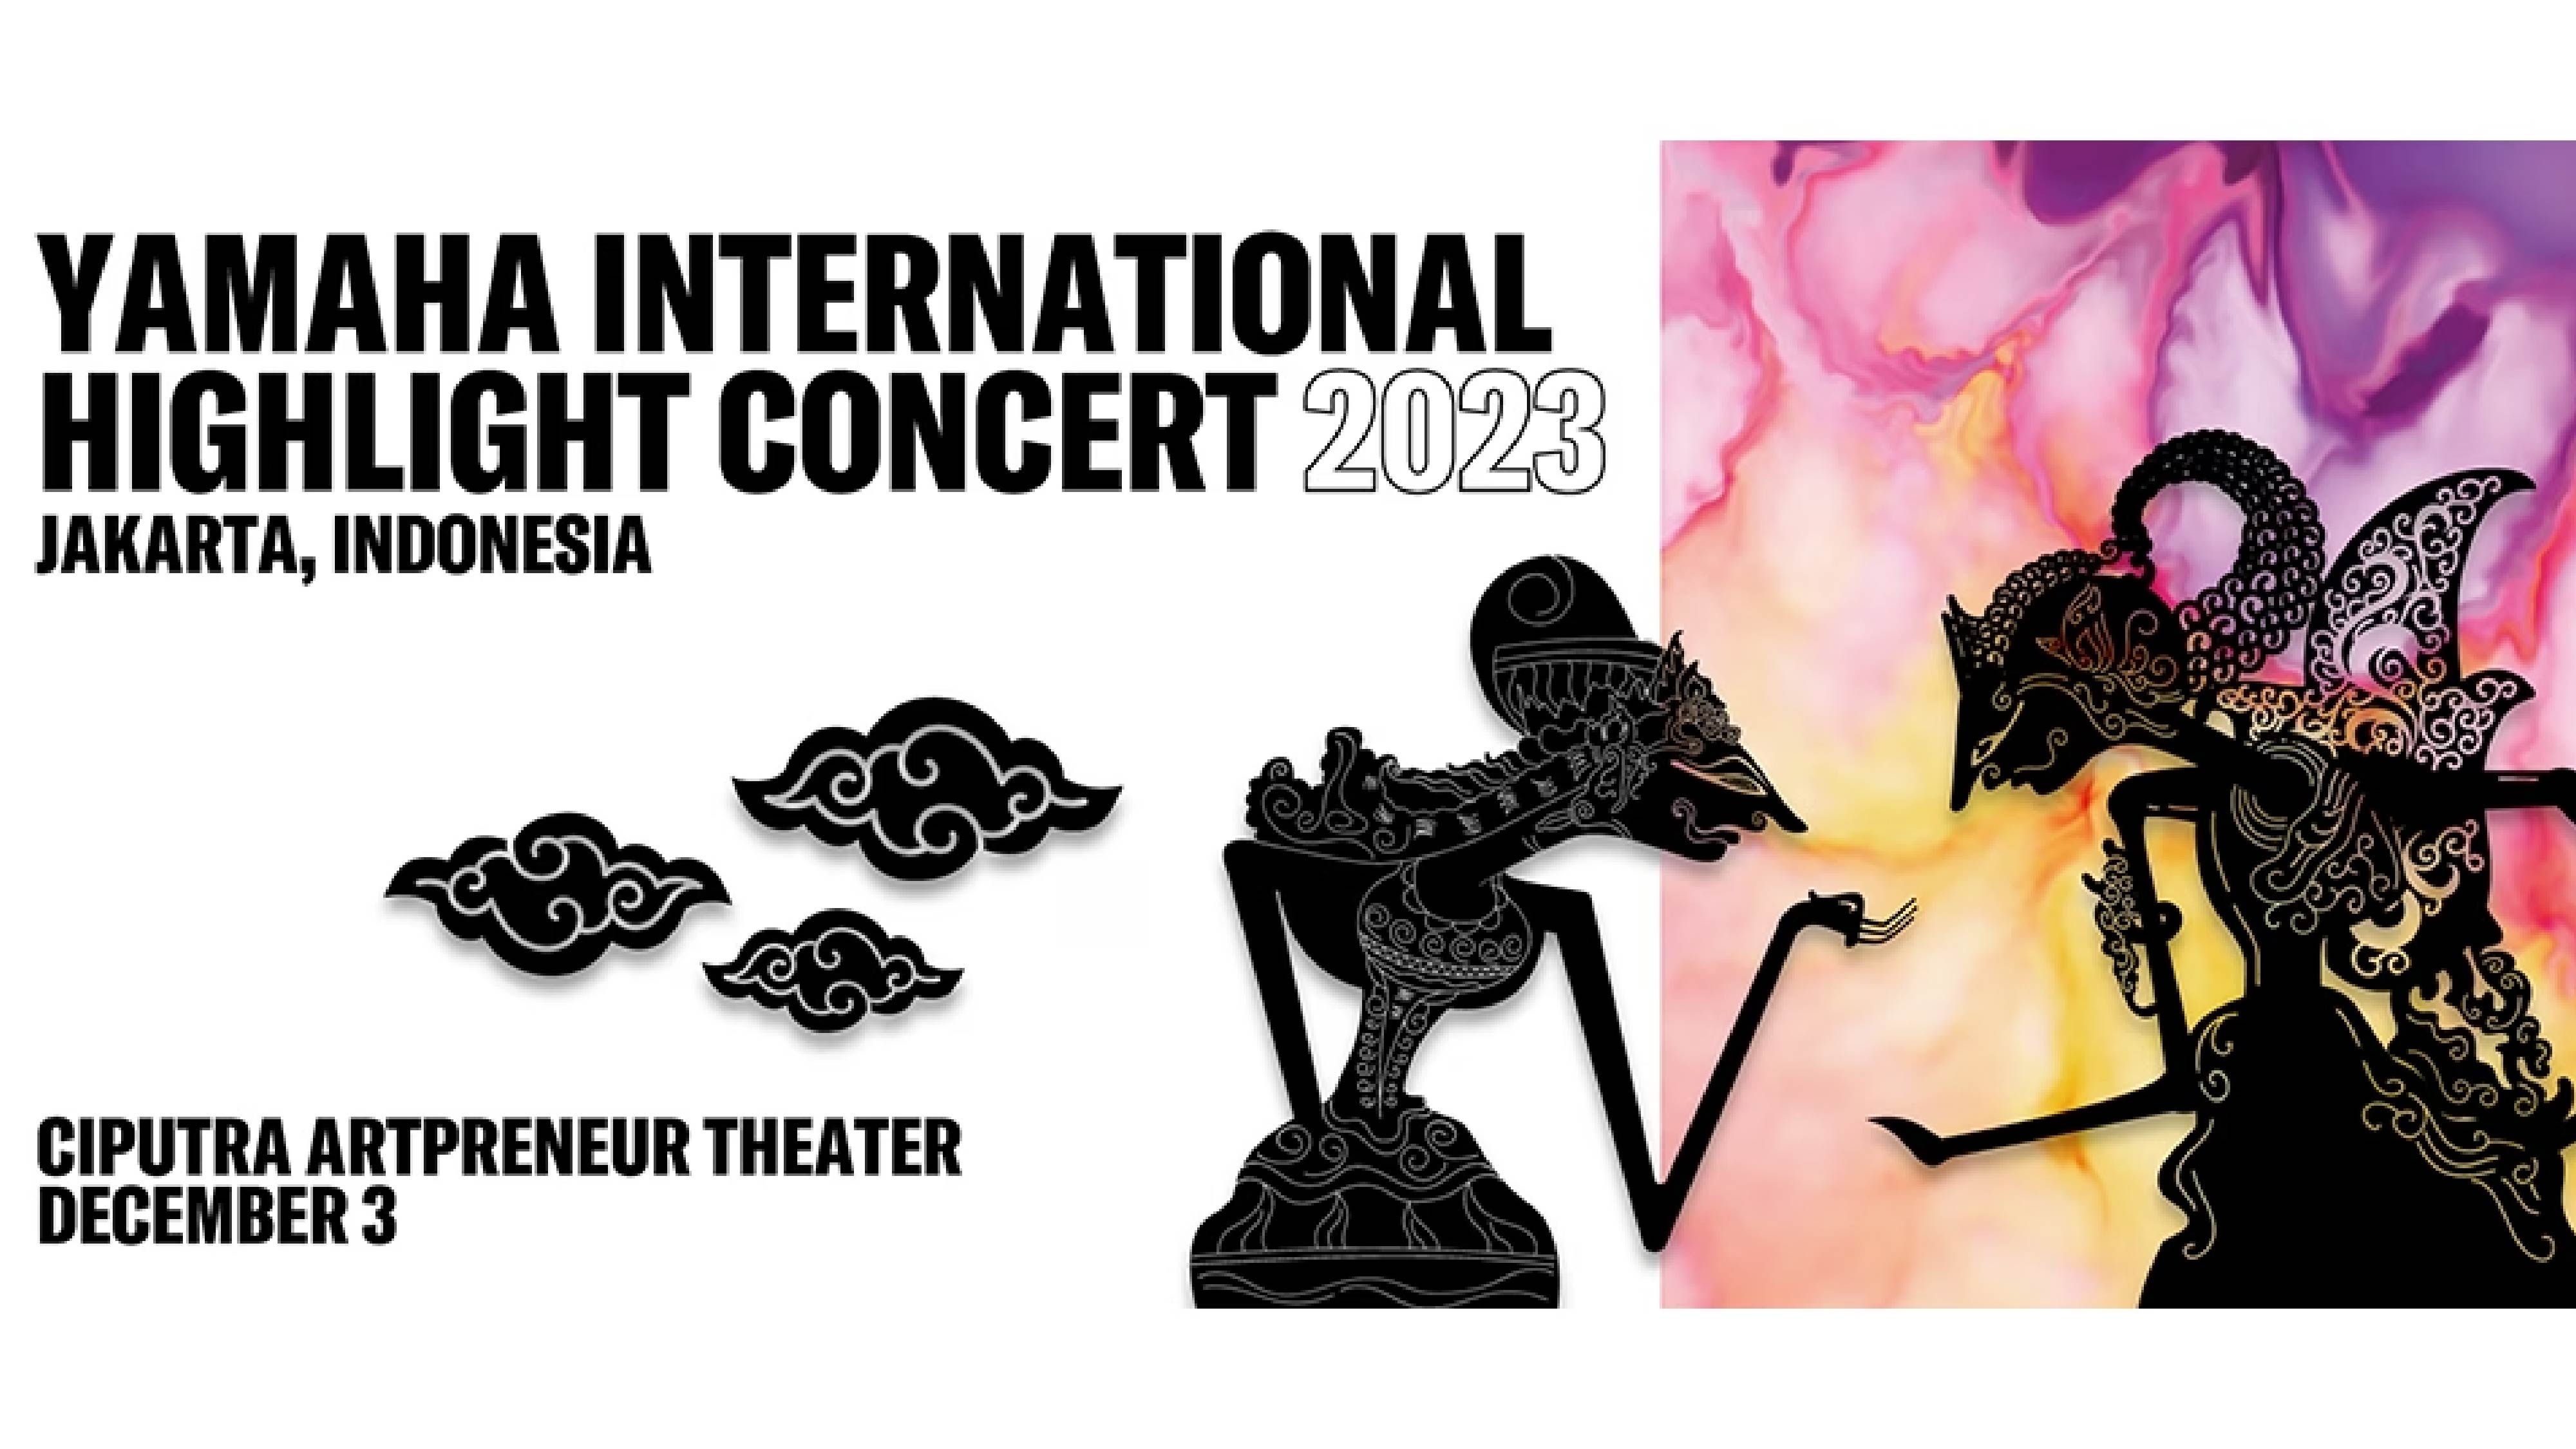 Yamaha International Highlight Concert 2023